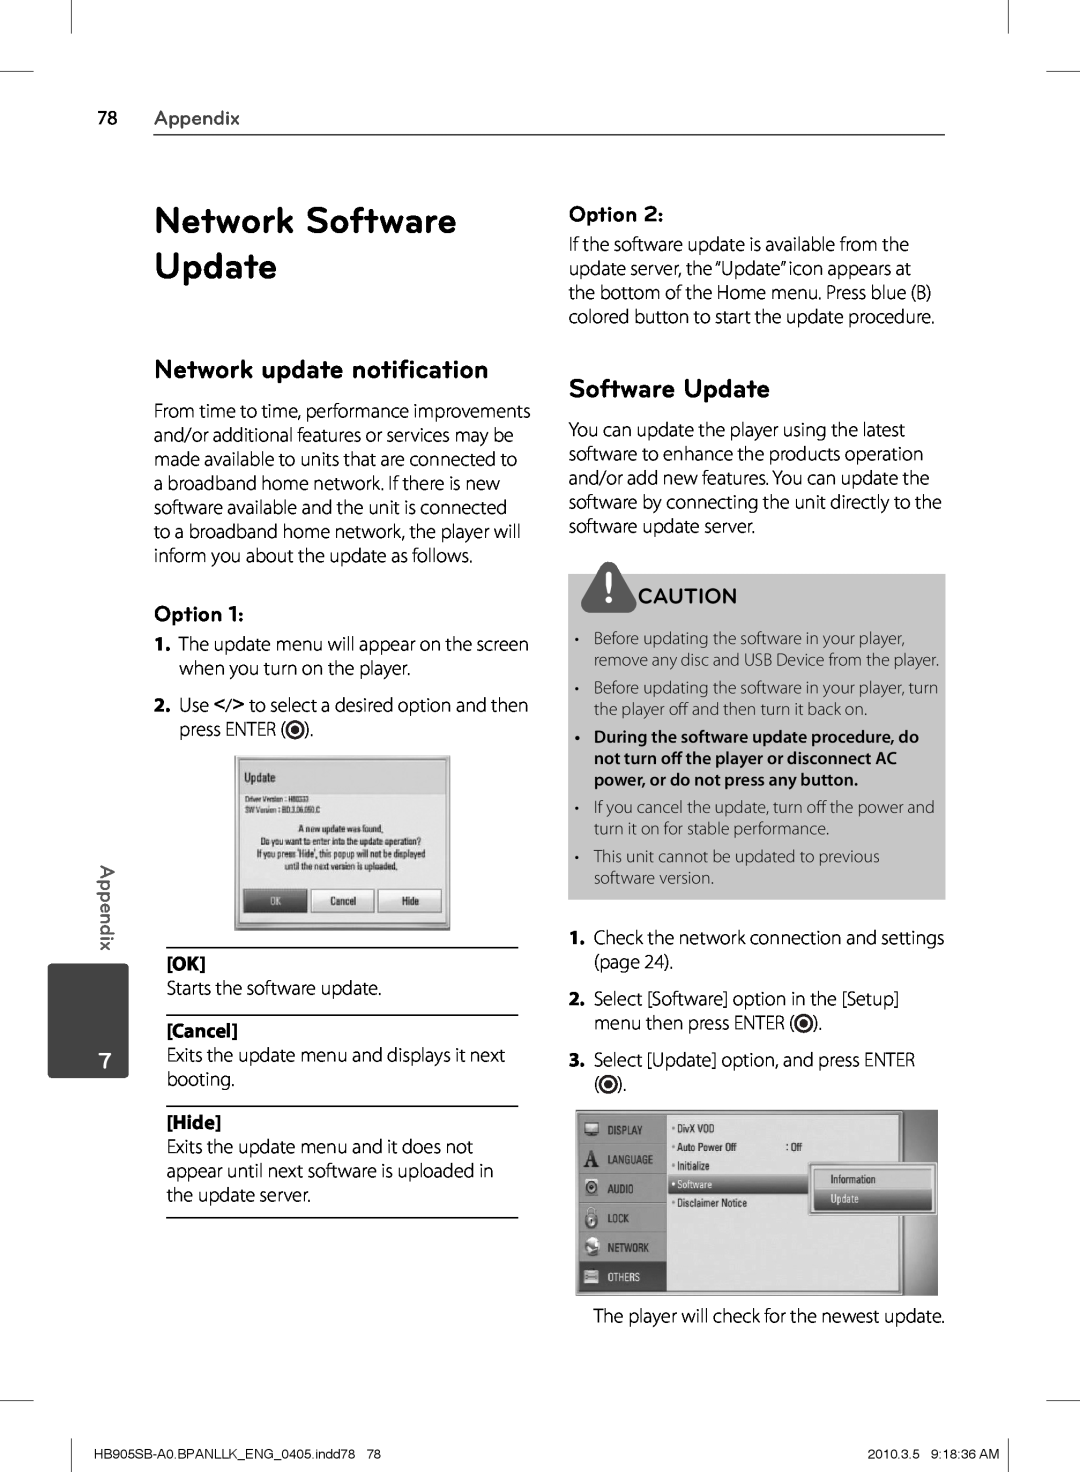 LG Electronics HB905SB owner manual Network Software Update, Network update notiﬁcation, Option, 78Appendix, Hide, Cancel 